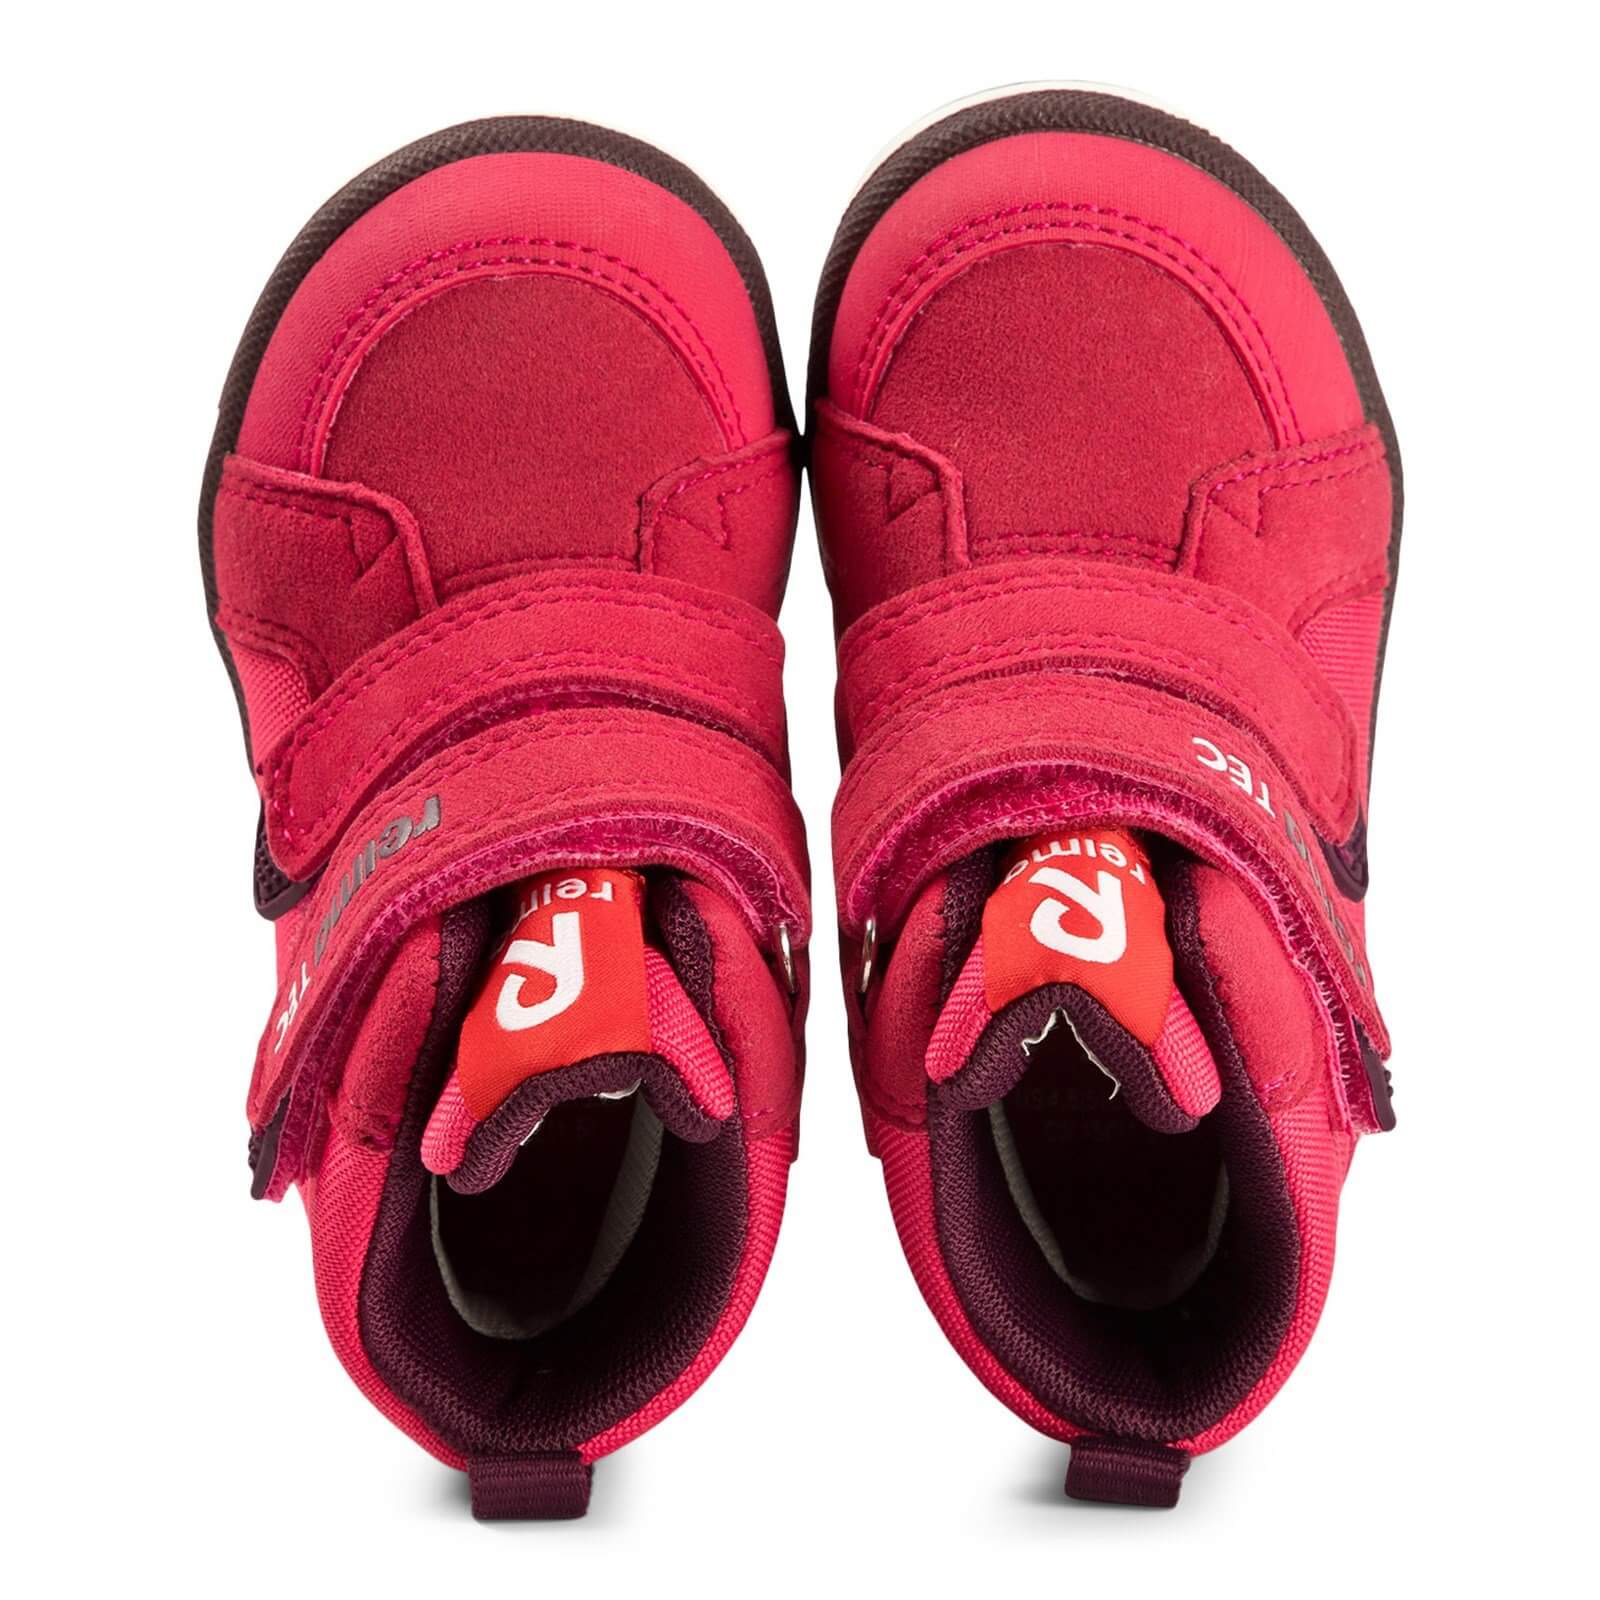 Reima patter. Reimatec® patter ботинки Raspberry Pink. Reima patter 2.0. Рейма ботинки 158093.